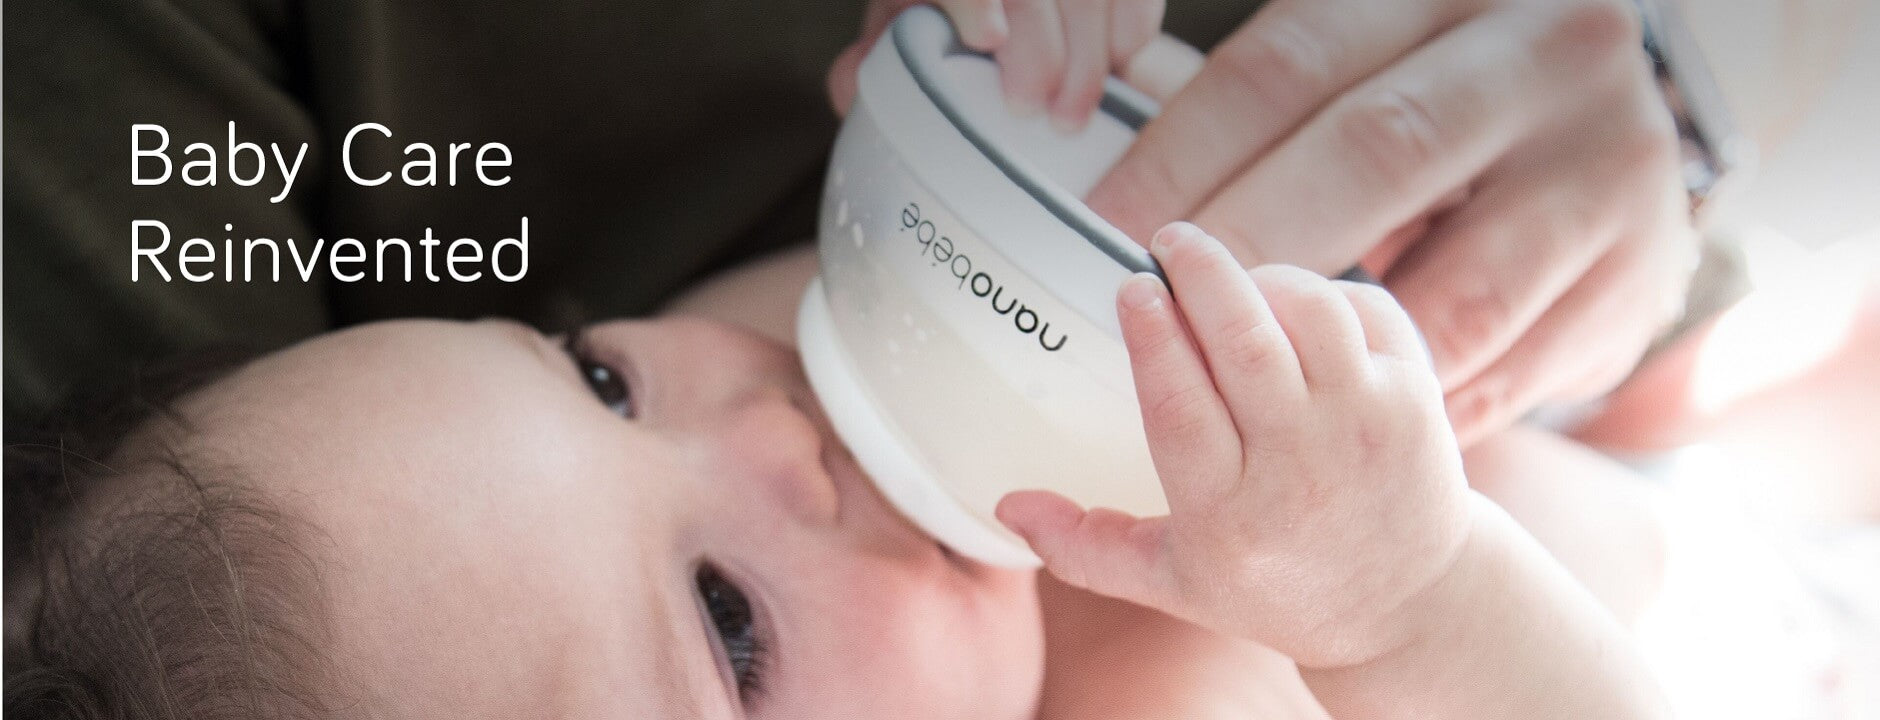 Baby Care Reinvented - baby nursing with Nanobébé Breastmilk Bottle